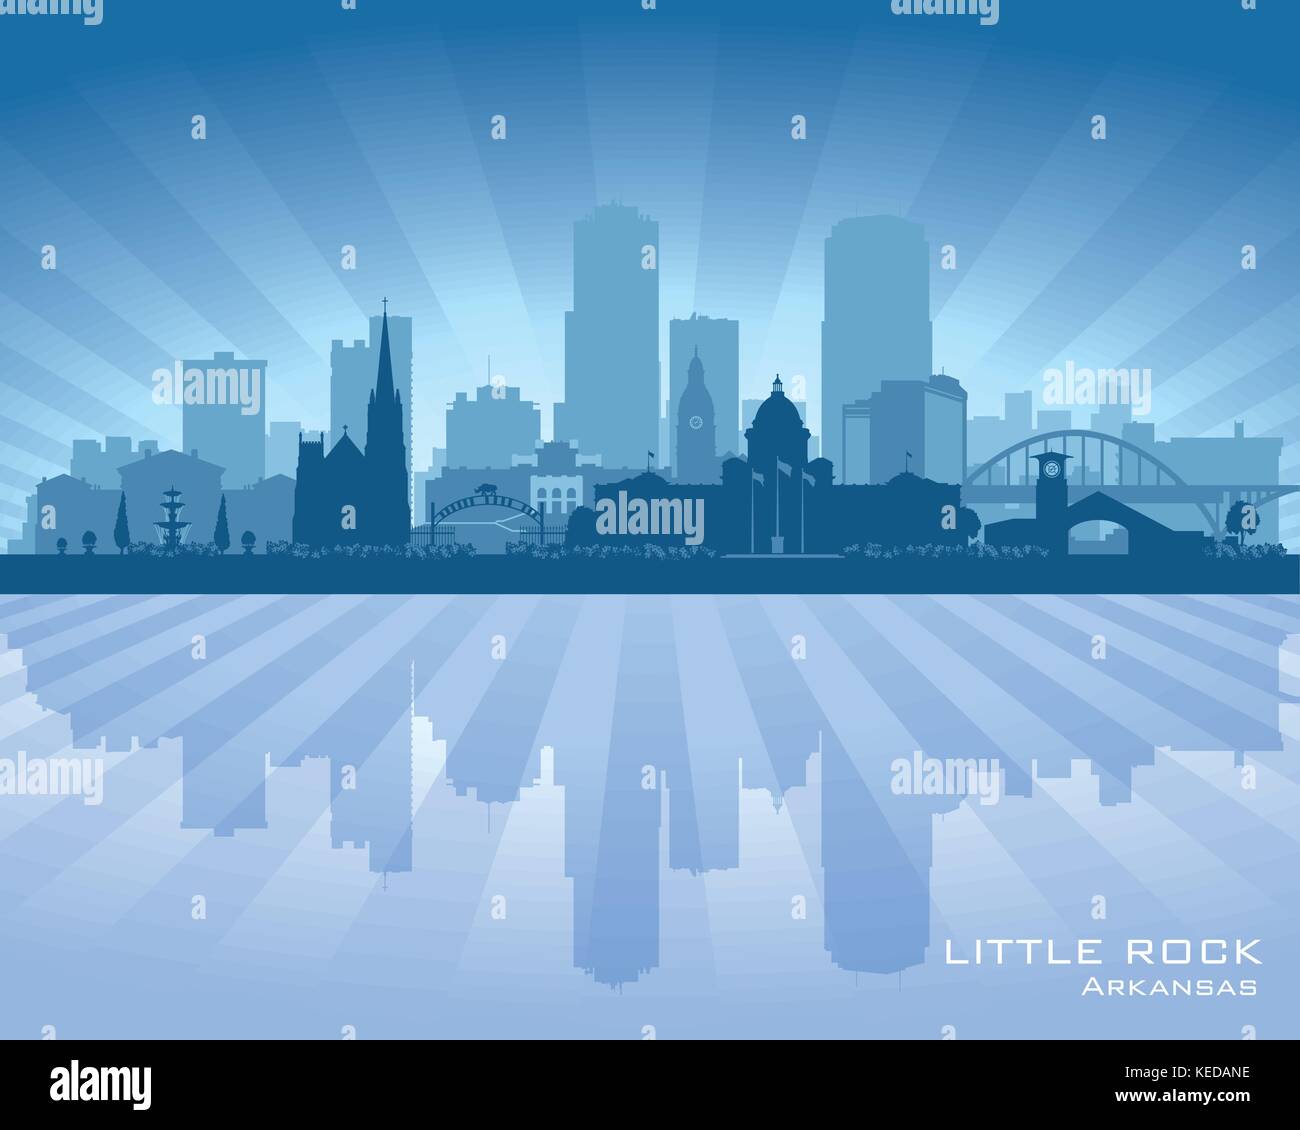 Little Rock Arkansas city skyline vector silhouette illustration Stock Vector